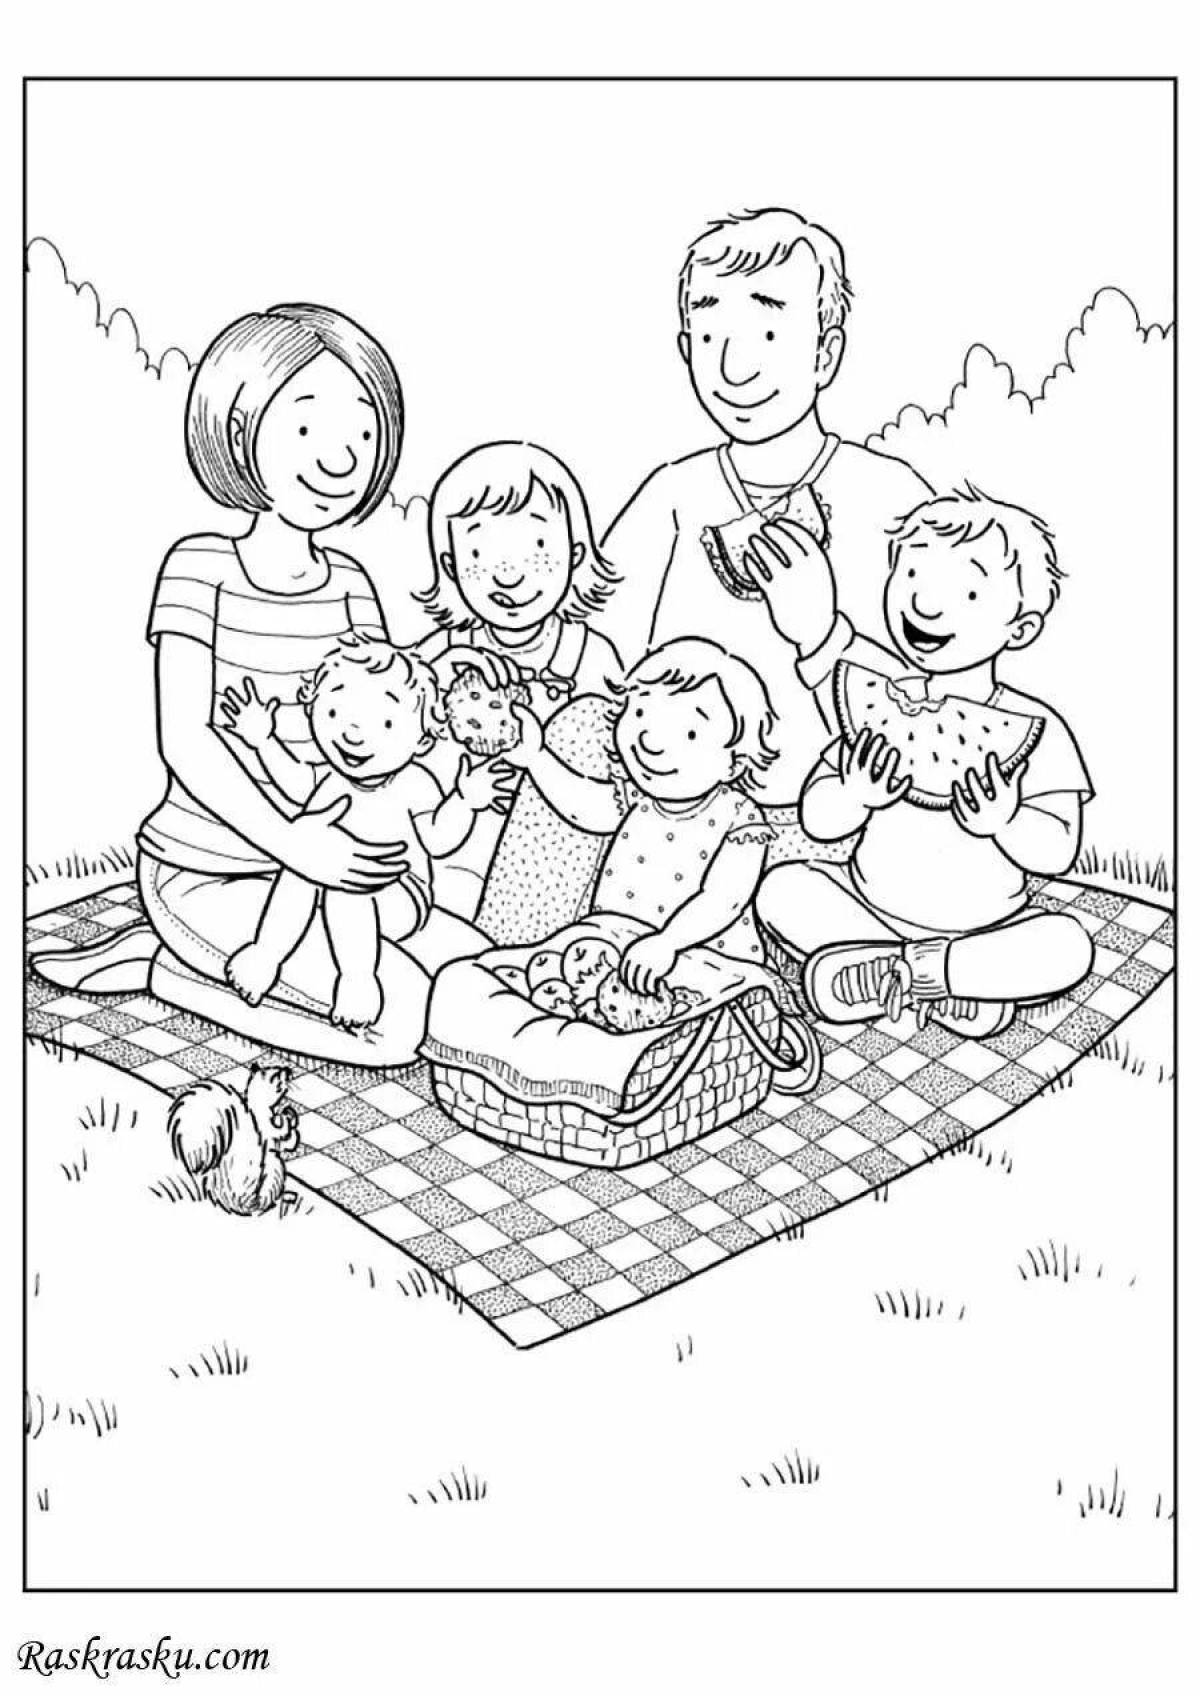 Joyful family coloring book for kids